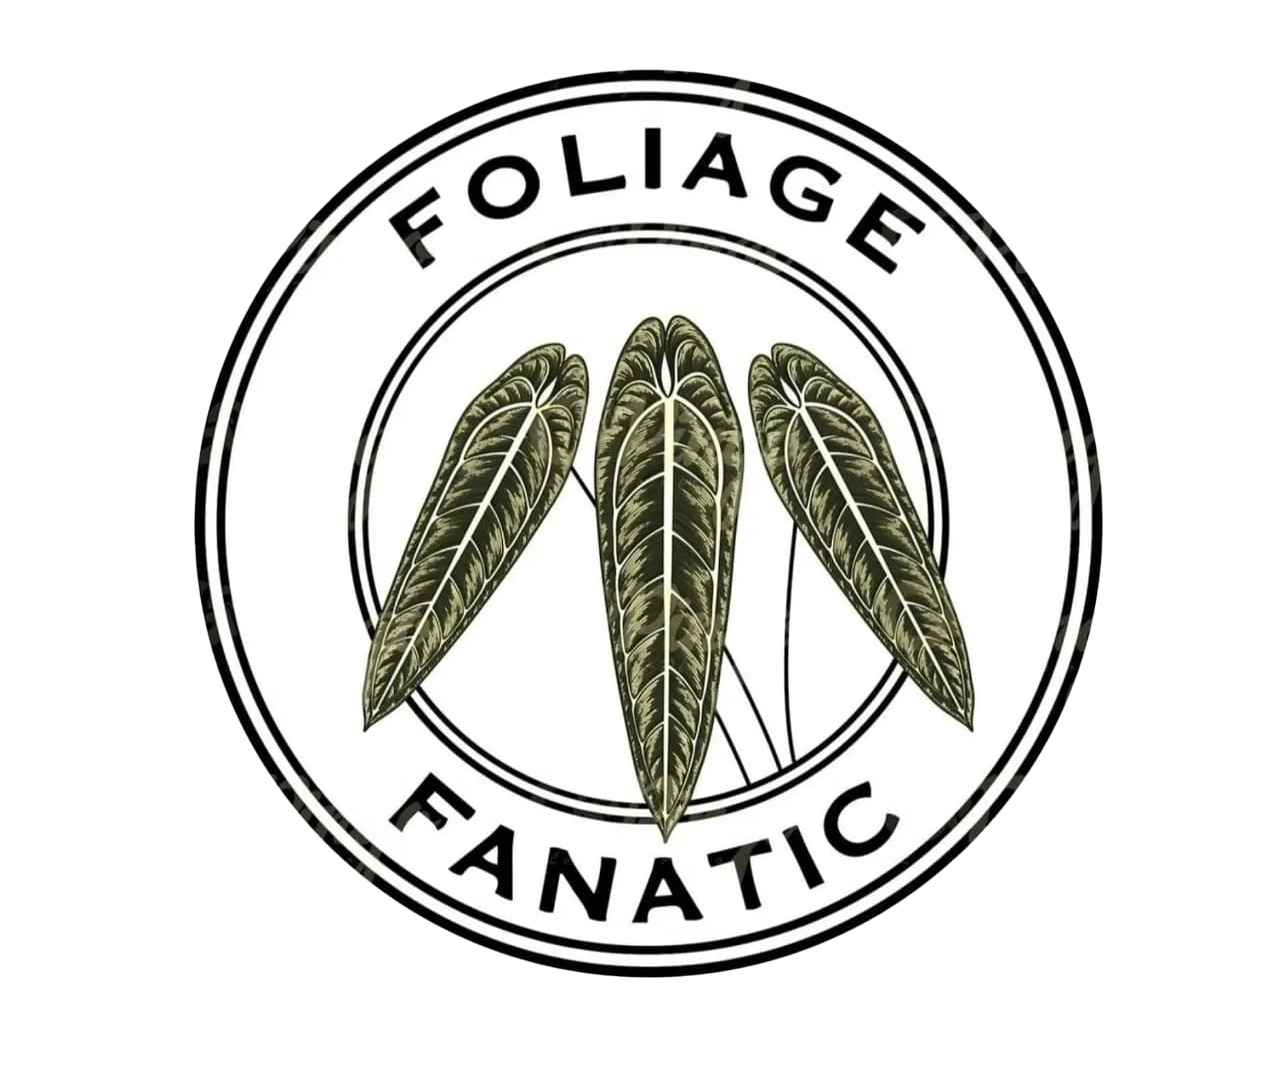 Foliage fanatic company logo